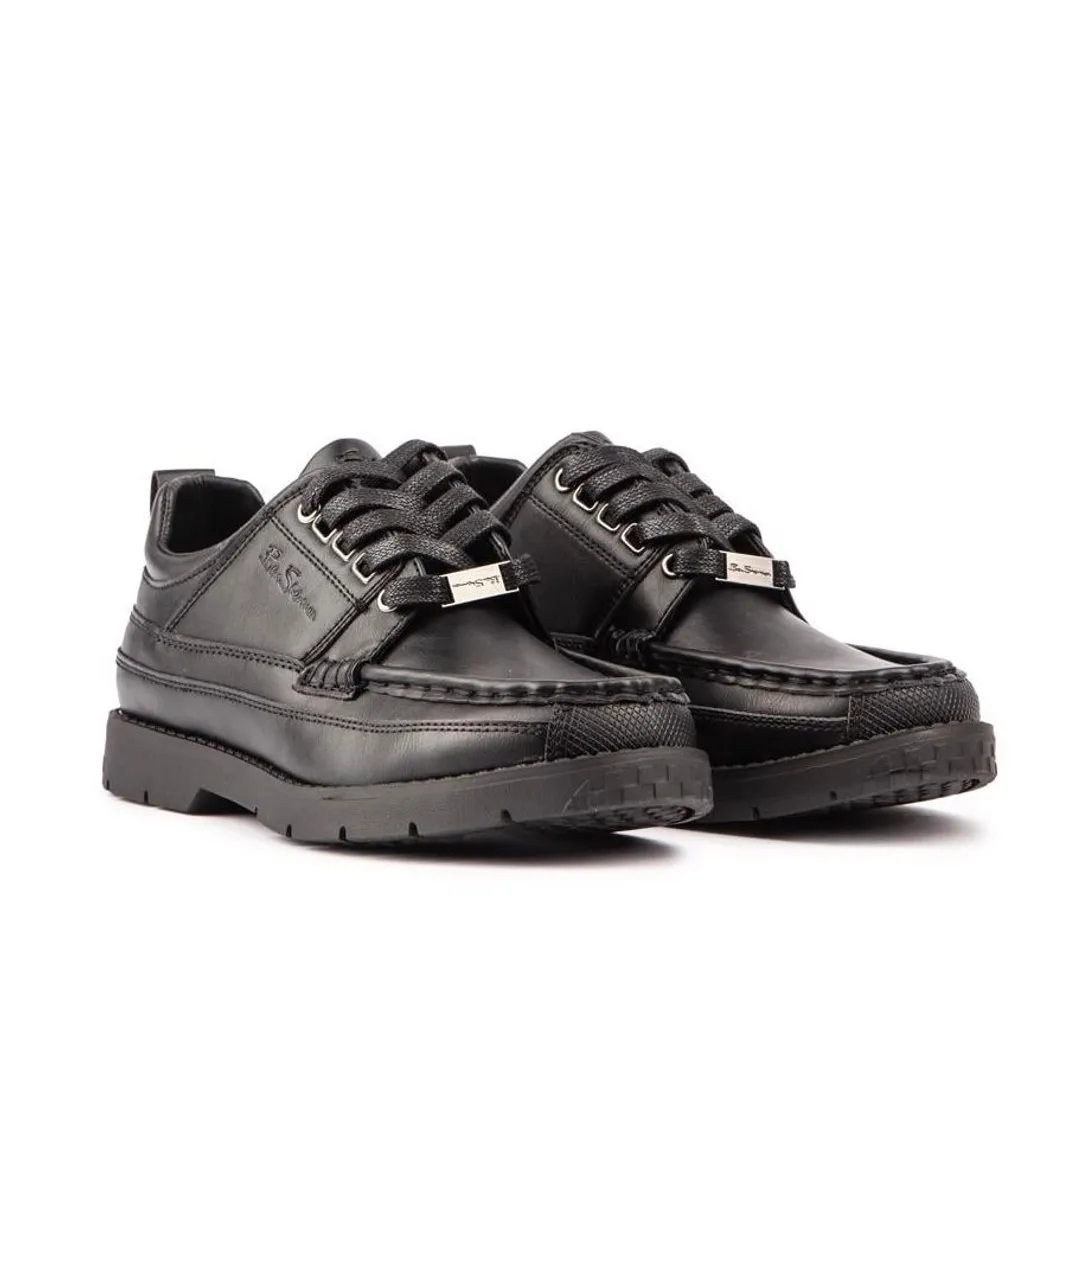 Ben Sherman Childrens Unisex Strum Shoes - Black